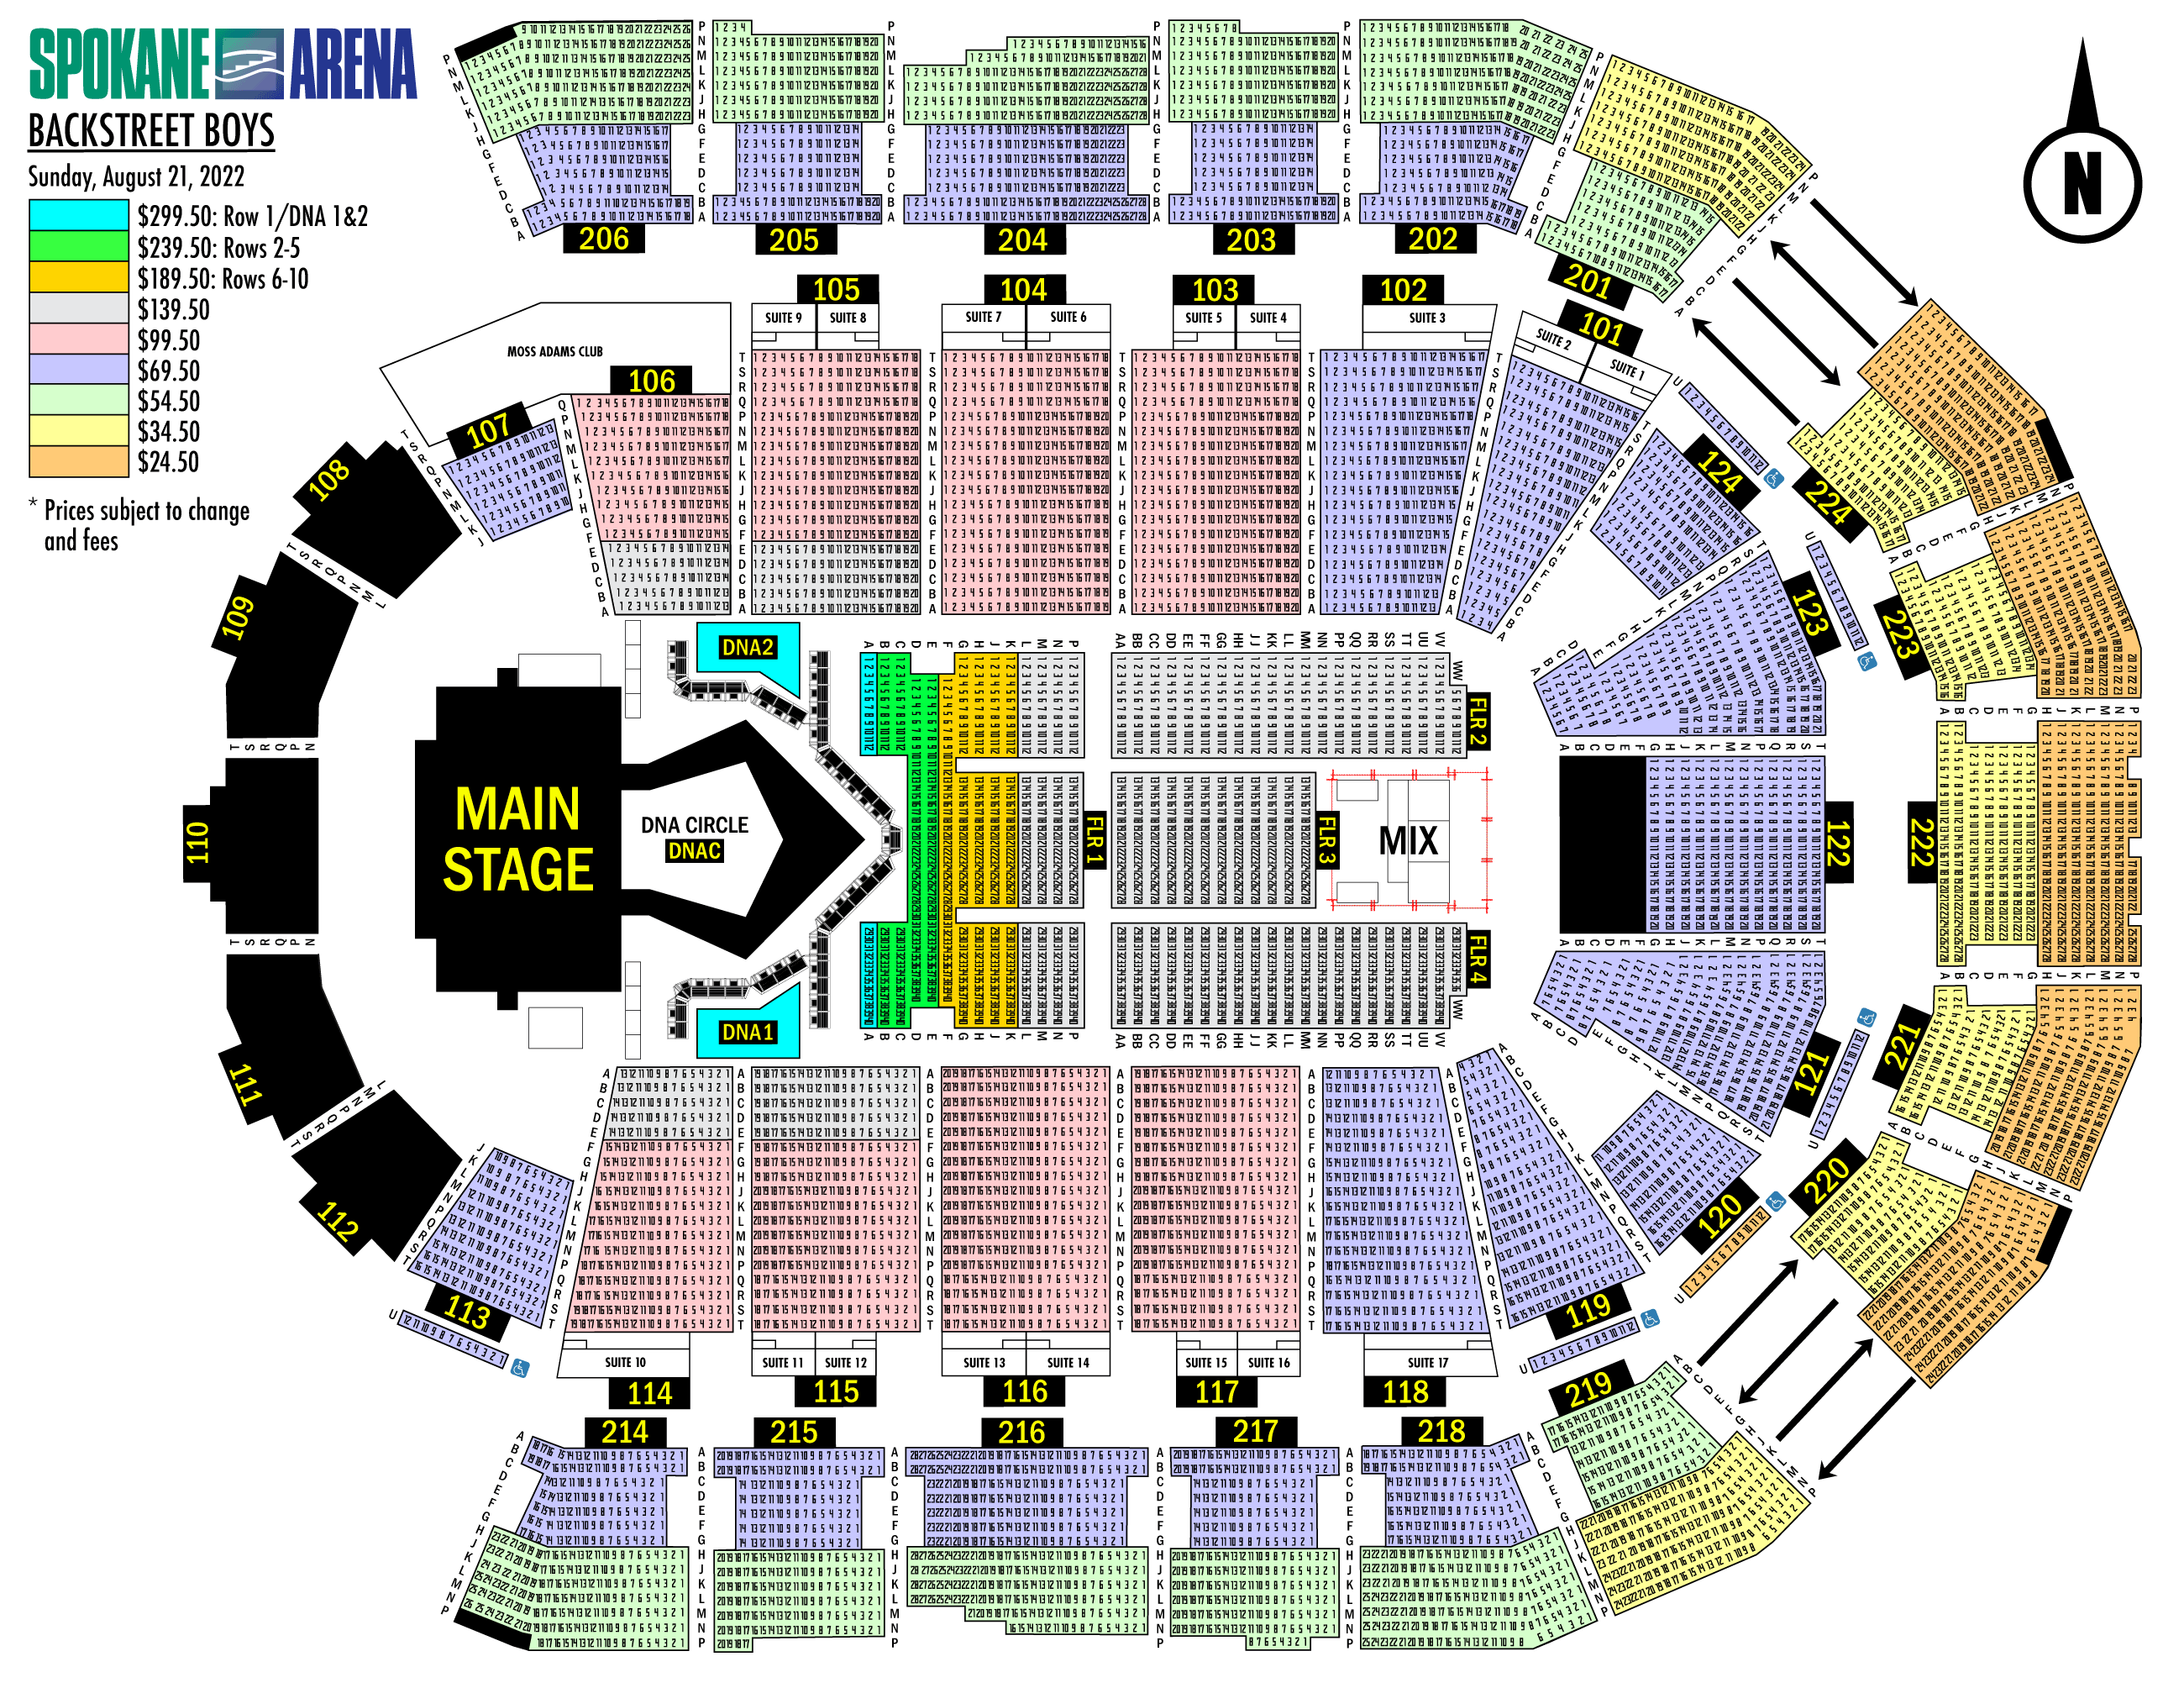 Backstreet Boys Spokane Arena Wednesday August 25 2021 24 299.